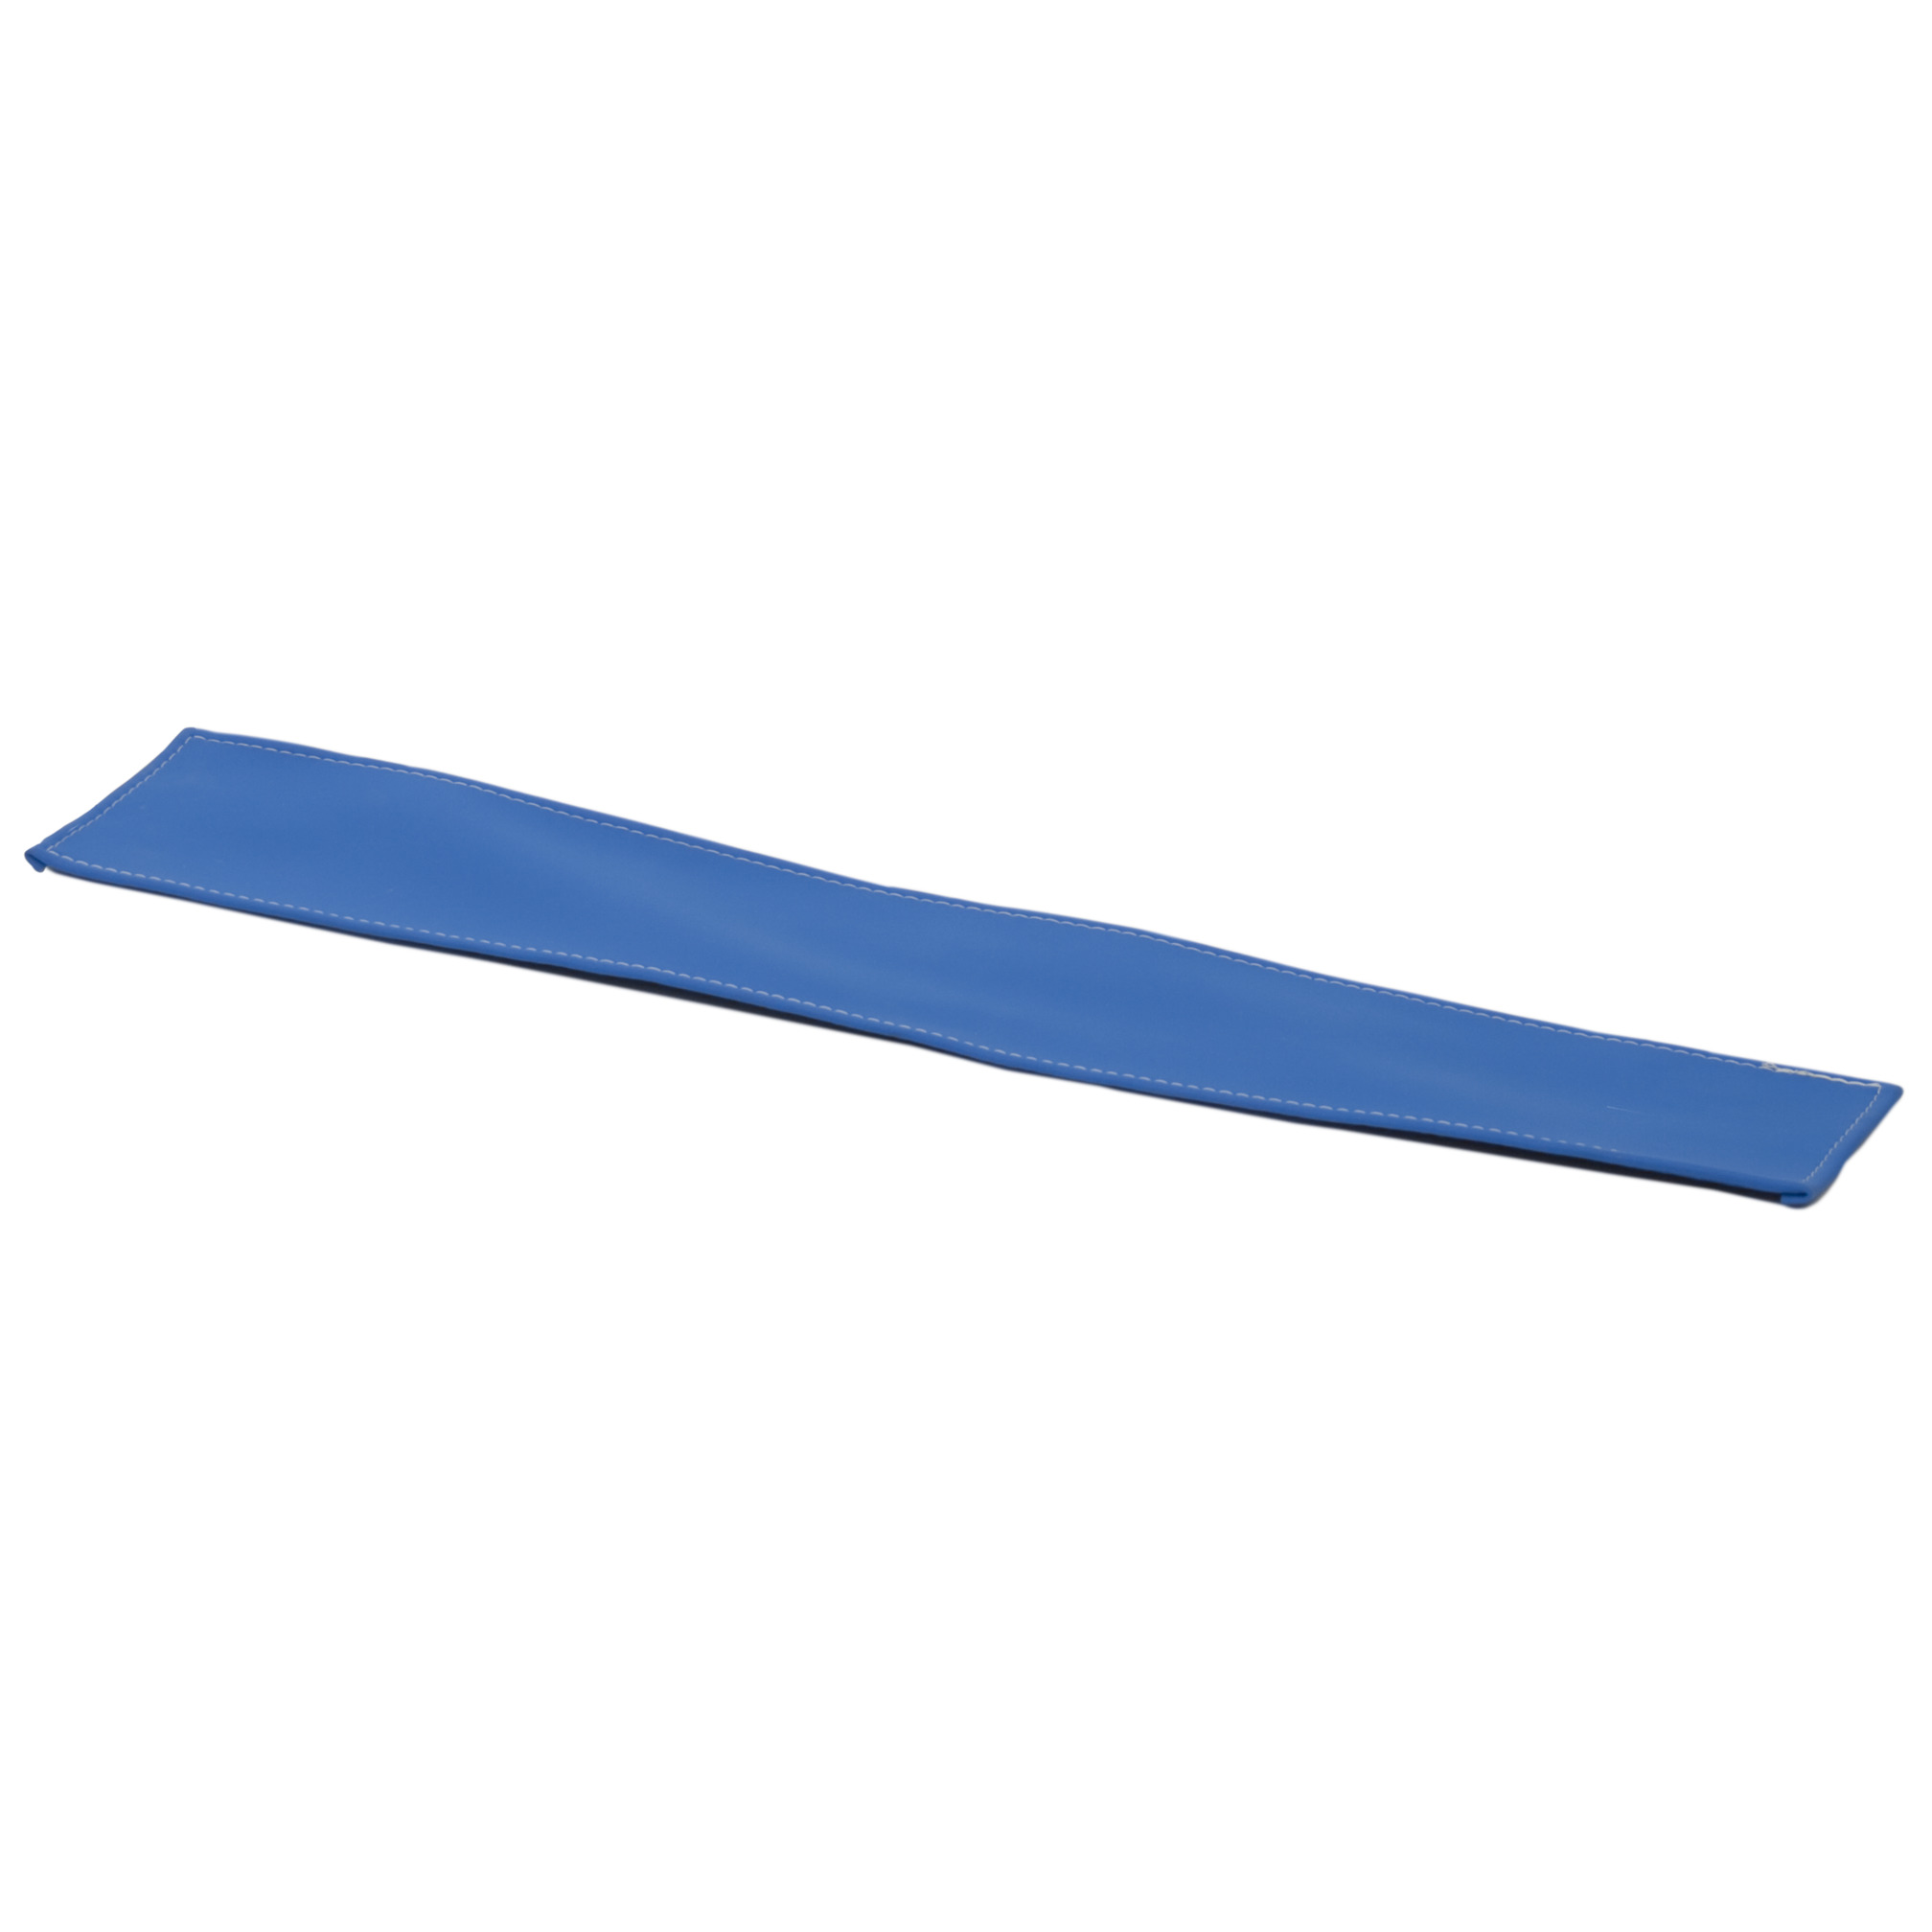 Coupling strip for gym blocks, L= 60 cm